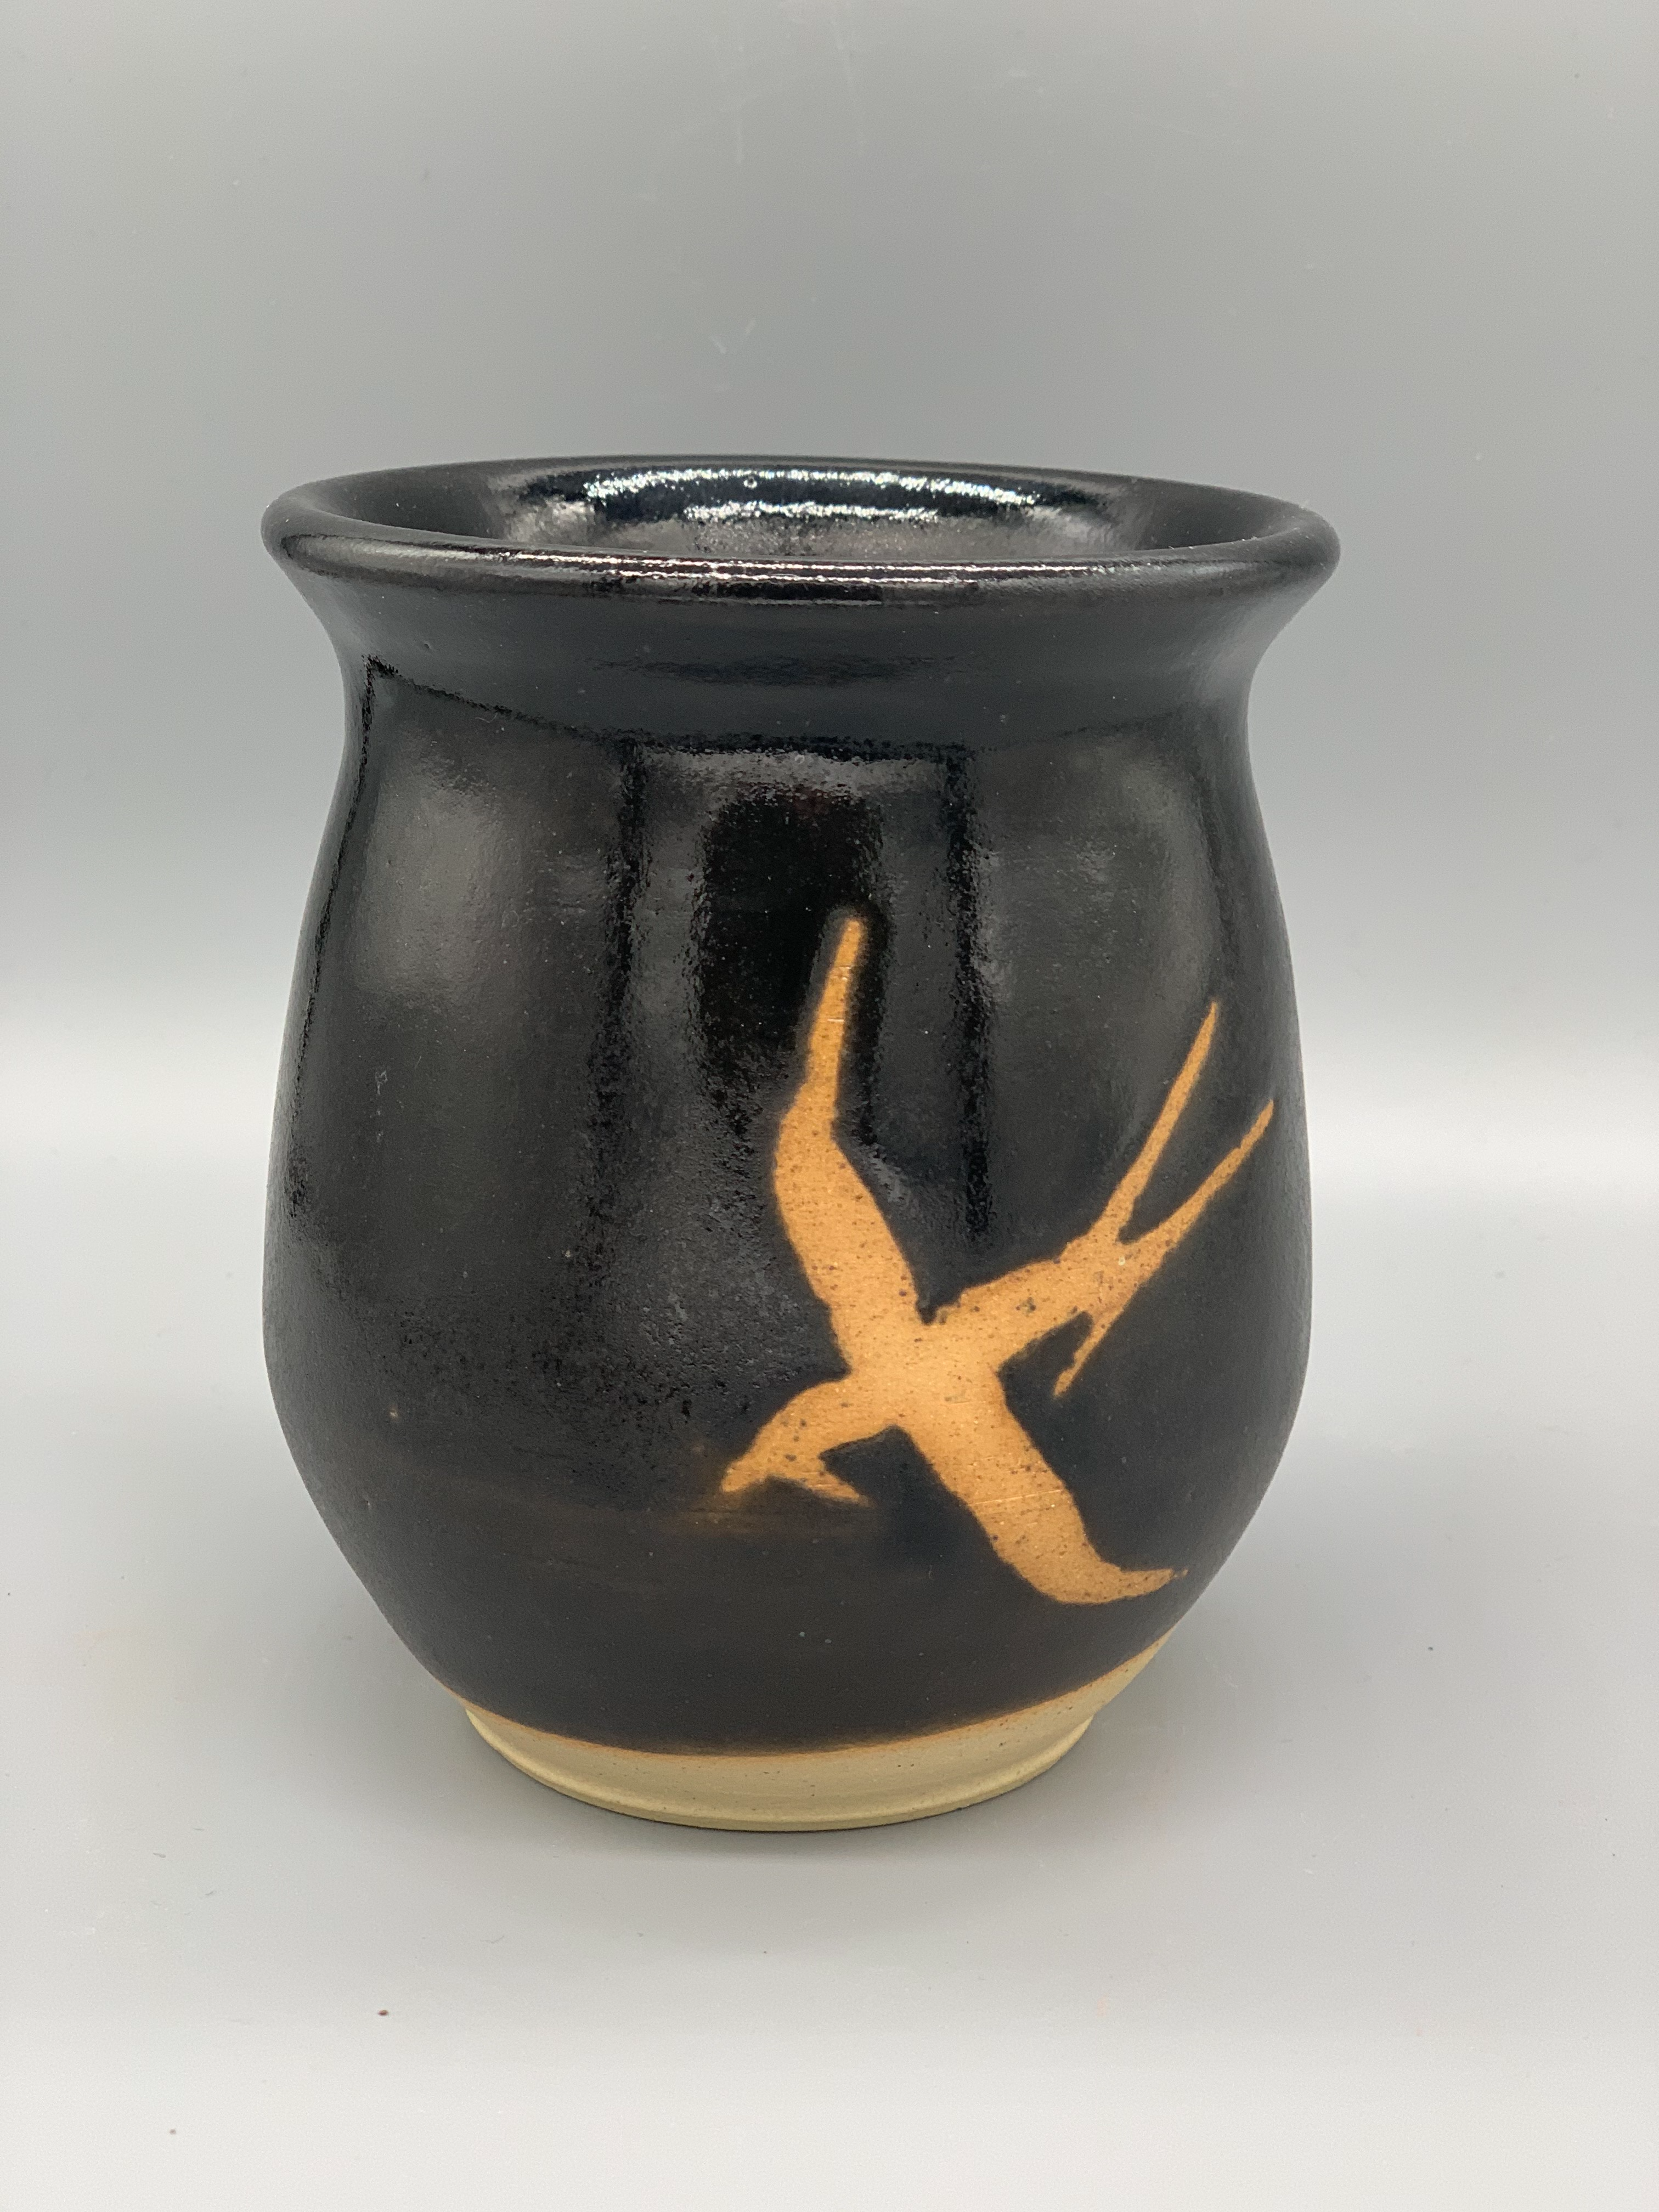 Wax Resist for ceramics - The Ceramic Shop